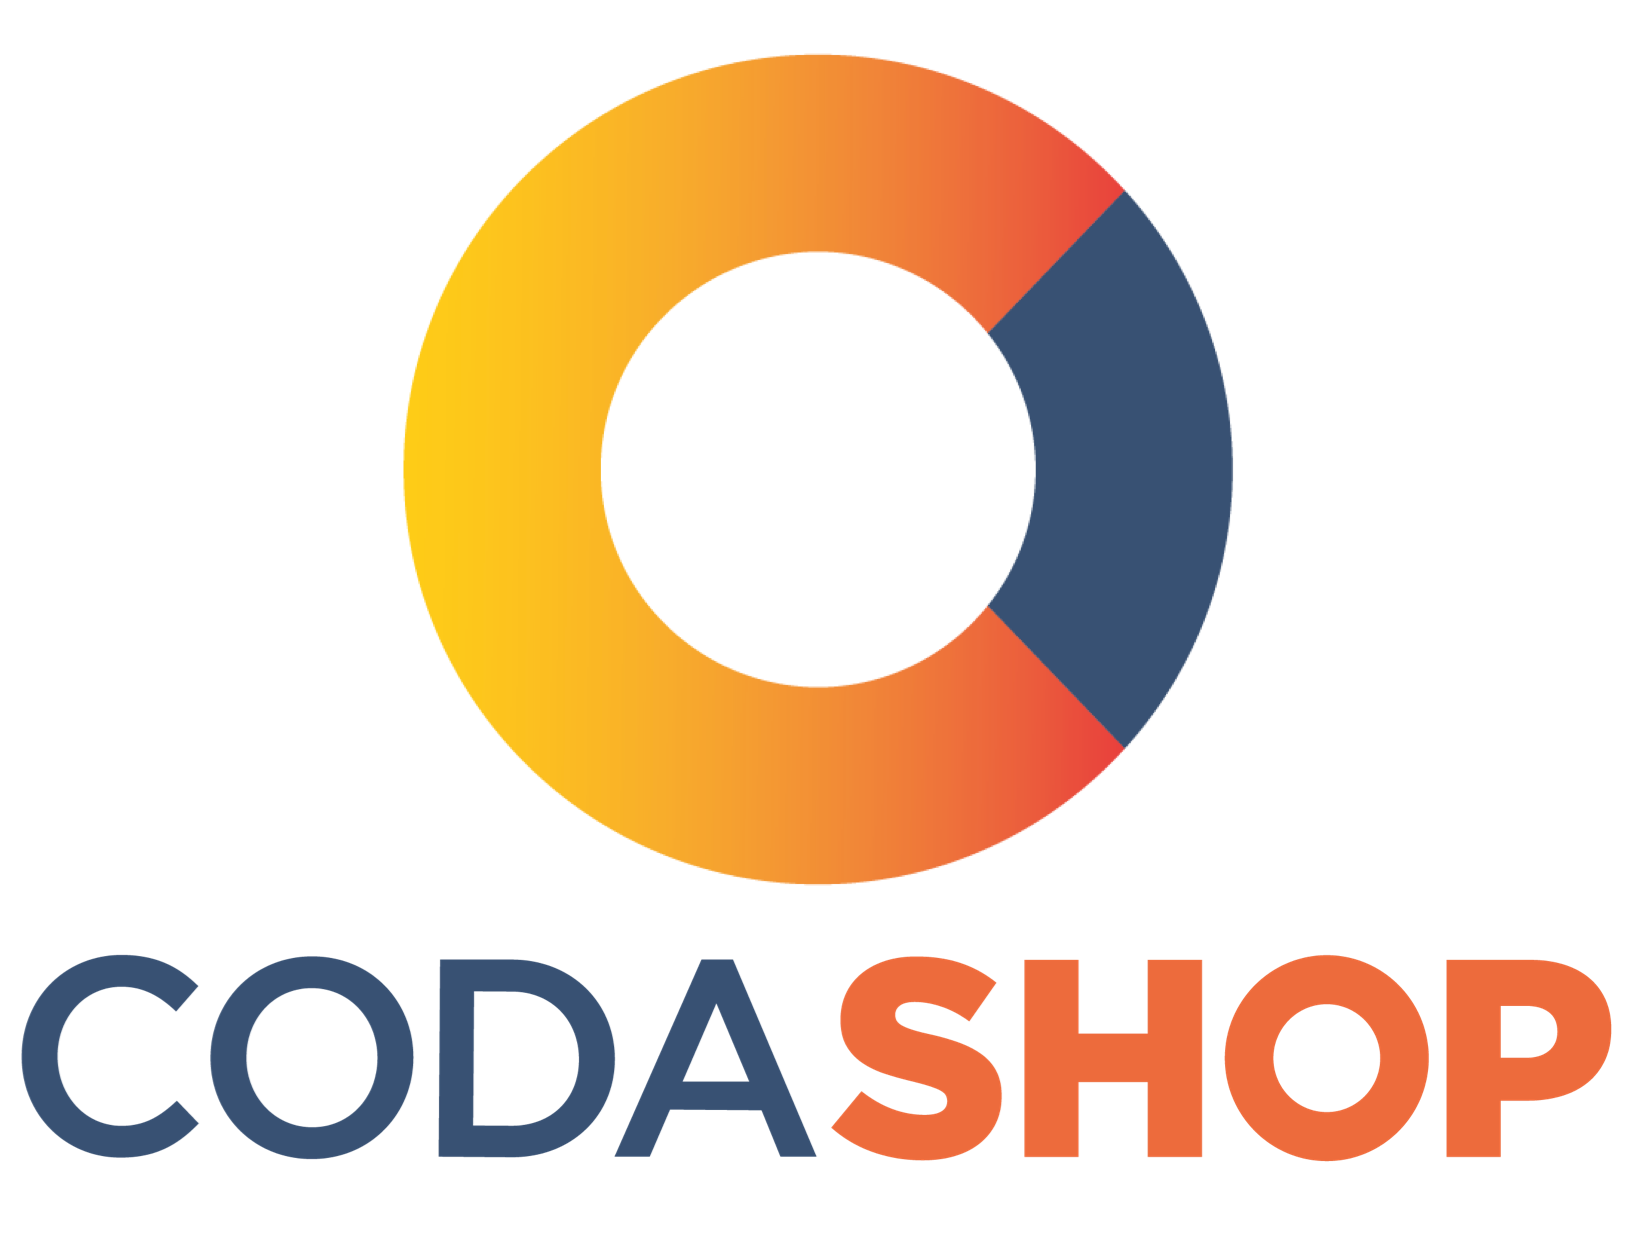 Codashop Logo_Coda Payments_large image_Download_PR-Newswire